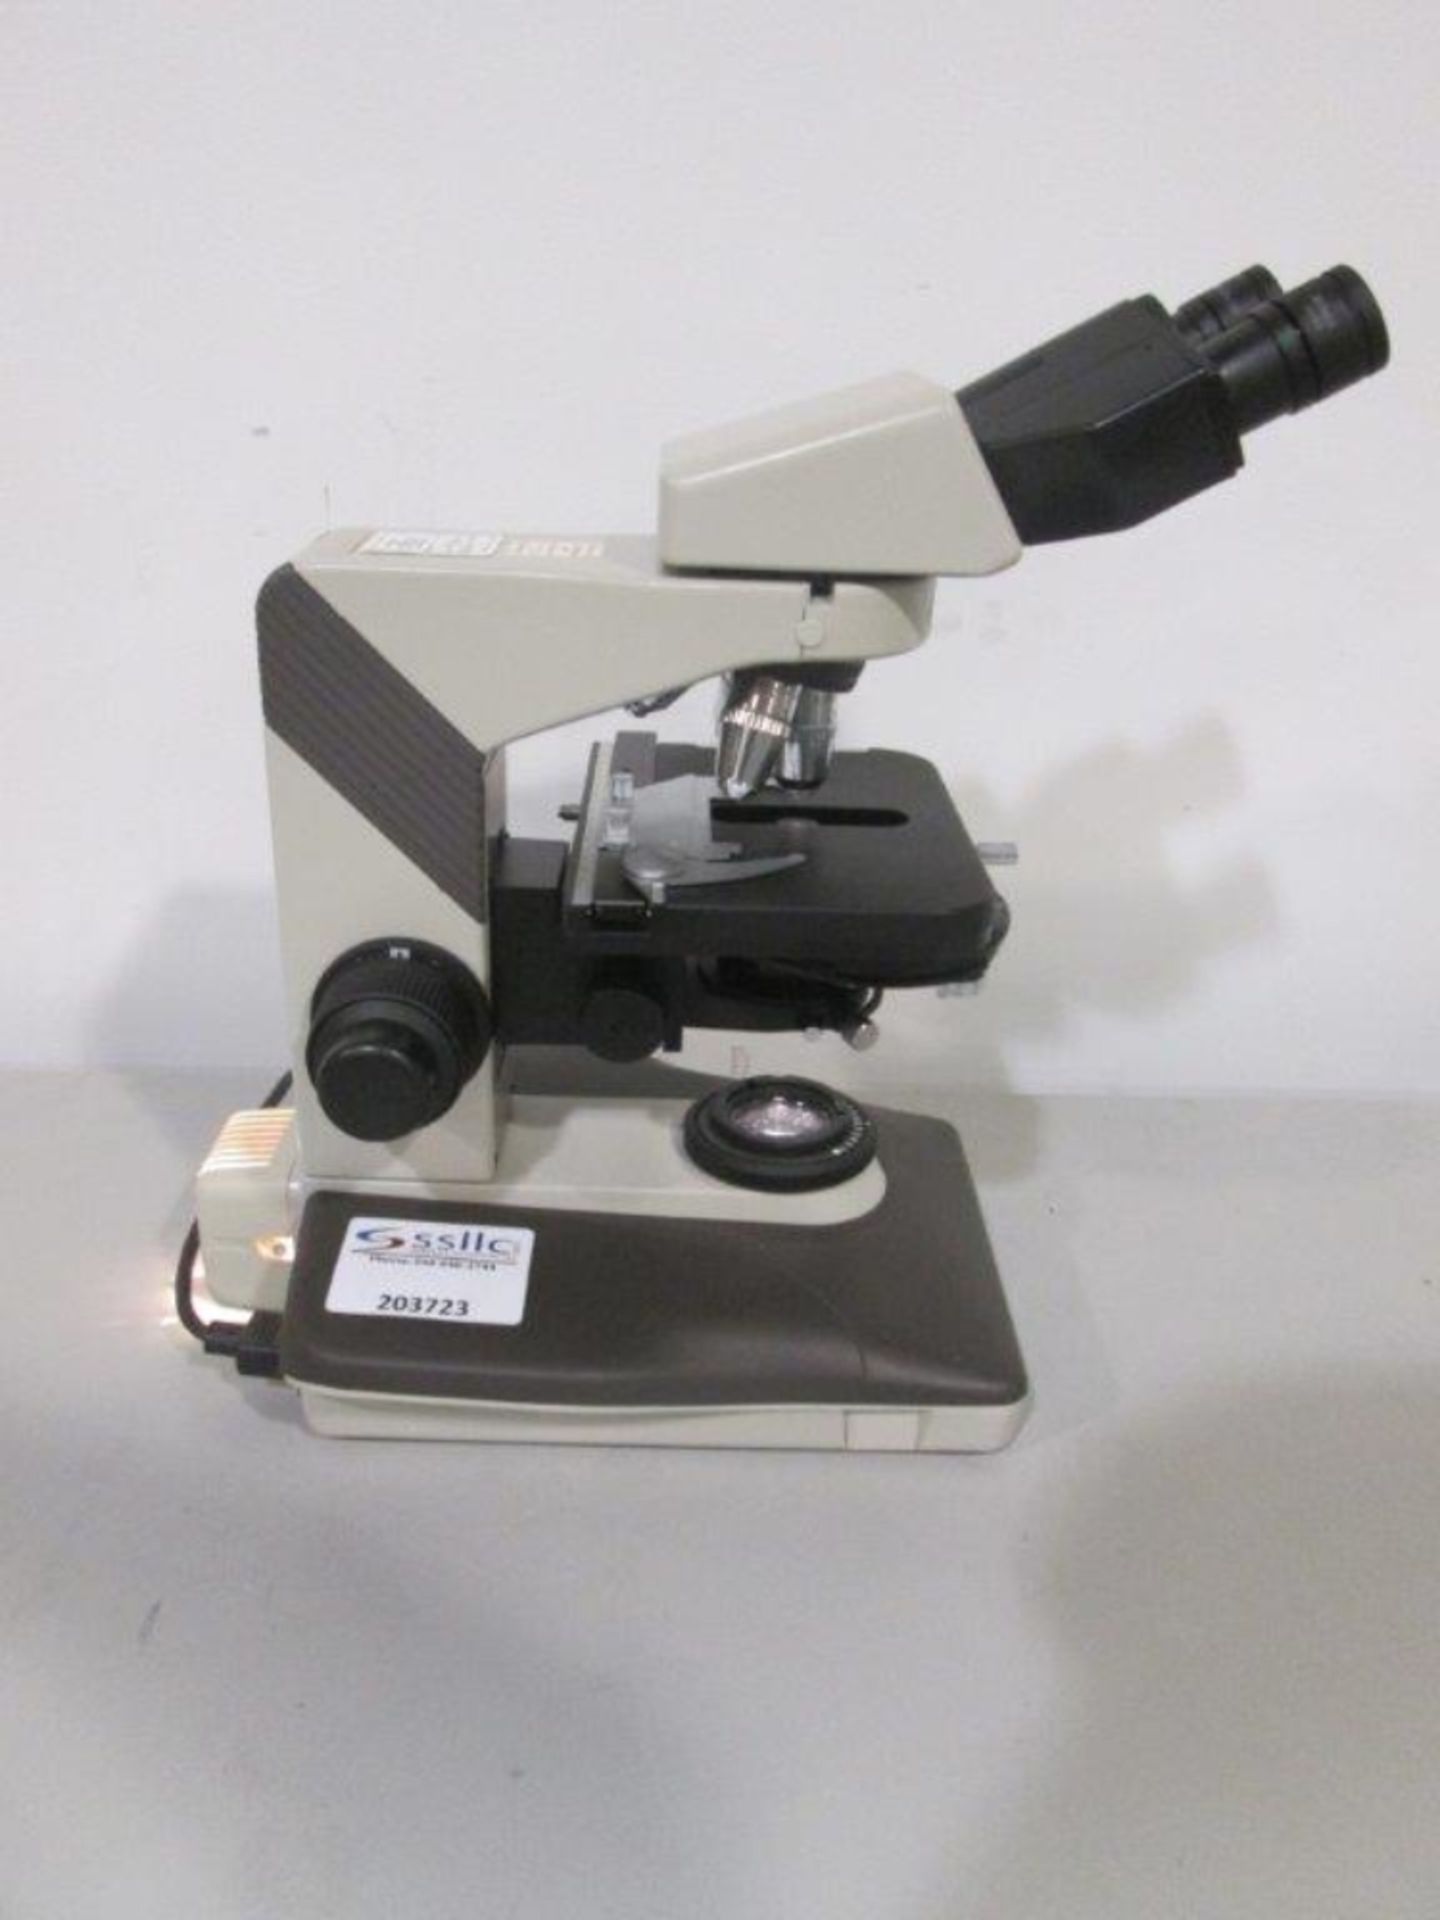 Nikon Labphot 2 Stereo Microscope - Image 2 of 3